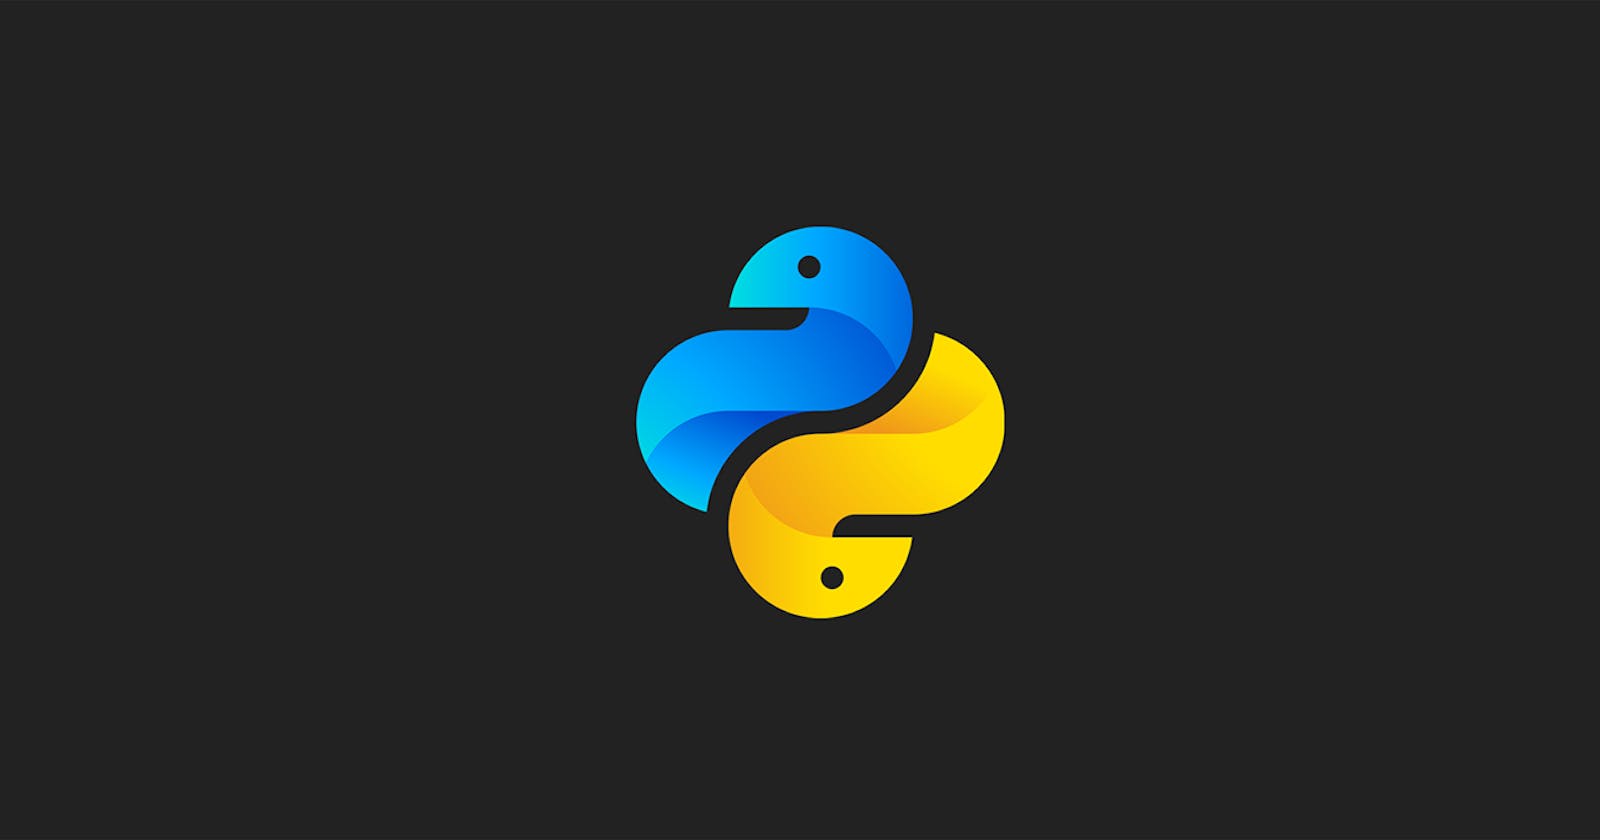 5- Run a Python program